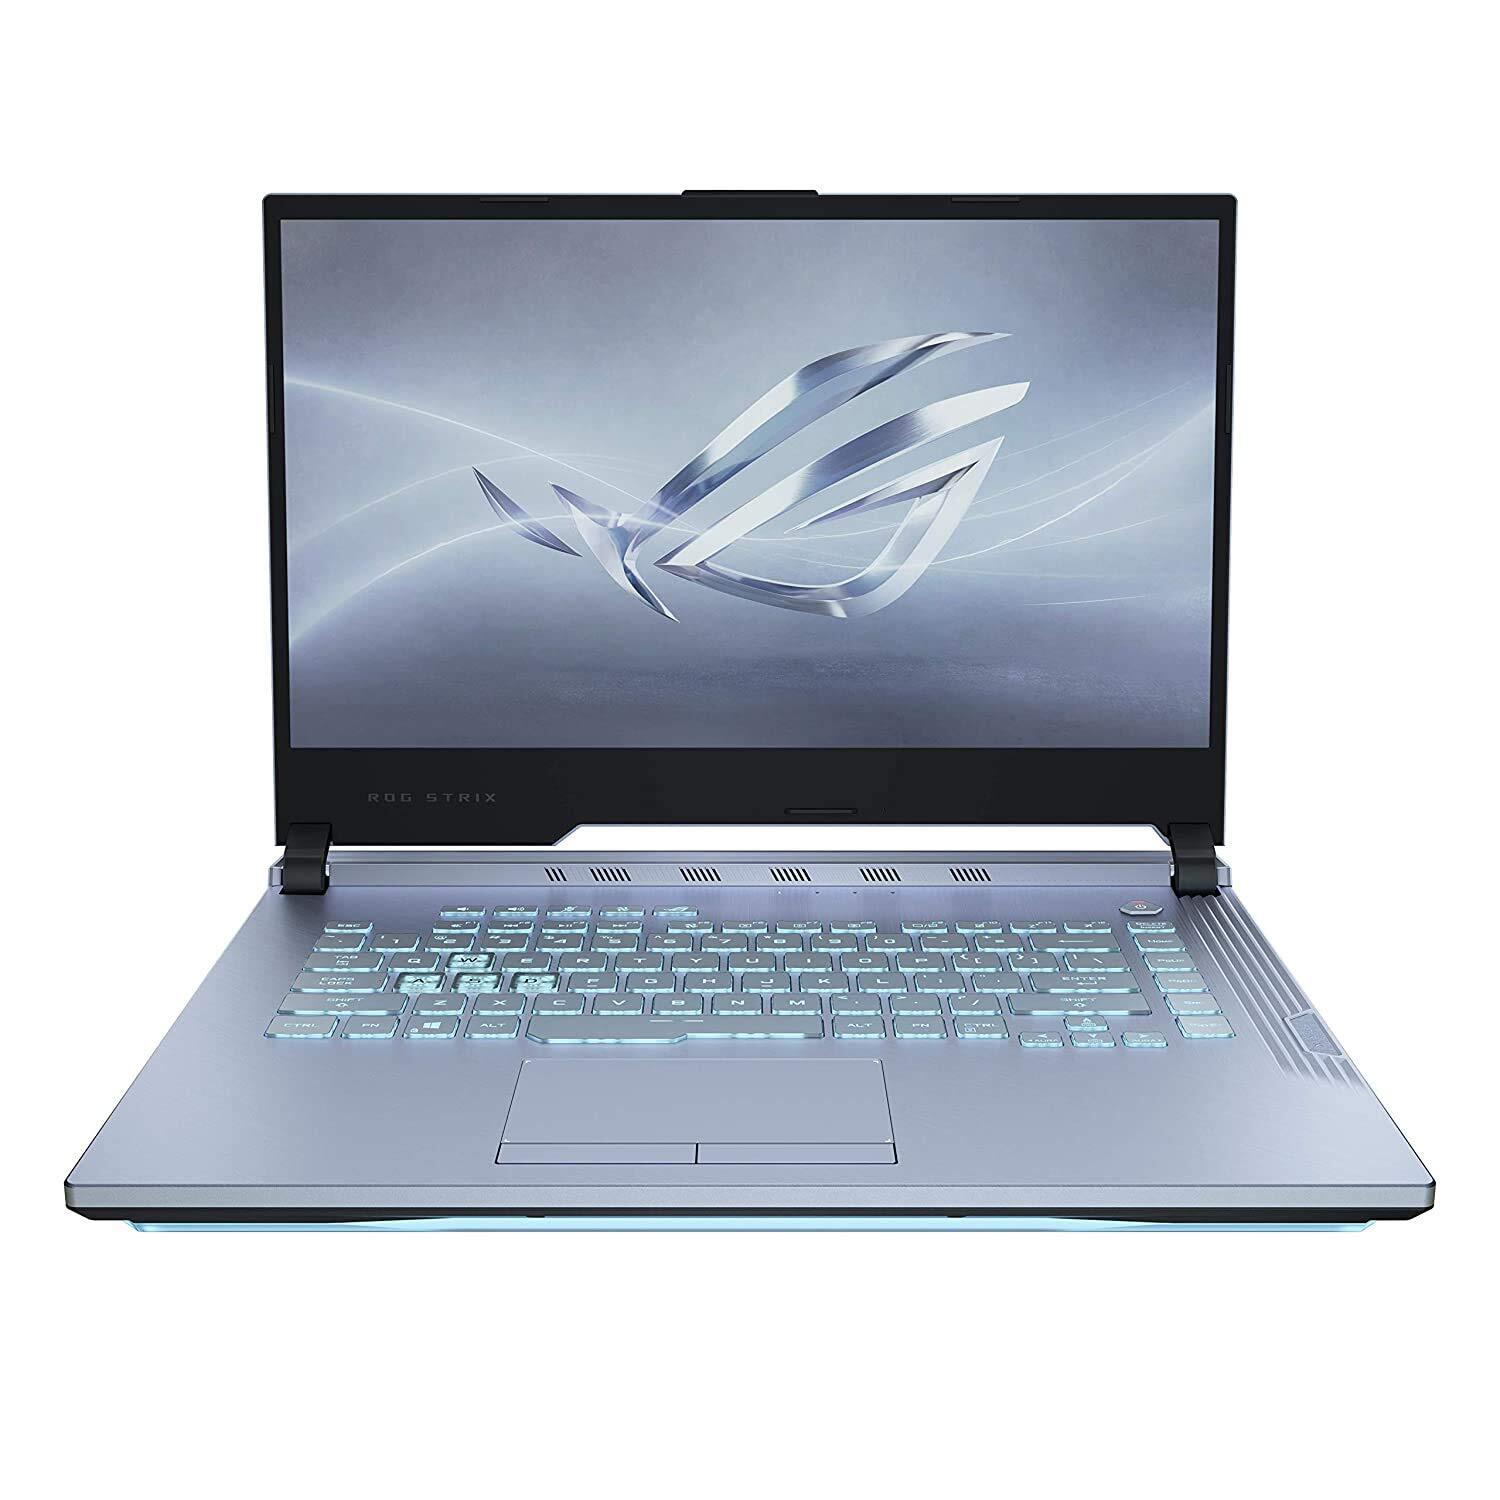 Asus Gaming Laptop ROG Strix G17 i7-10750H(16 Gb Ram,1T SSD,17.3 FHD-144hz,GTX1660Ti-6GB,RGB Backlit-4 Zone,WIFI6,WIN10,,Glacier Blue),G712LU-EV078T-M000000000544 www.mysocially.com